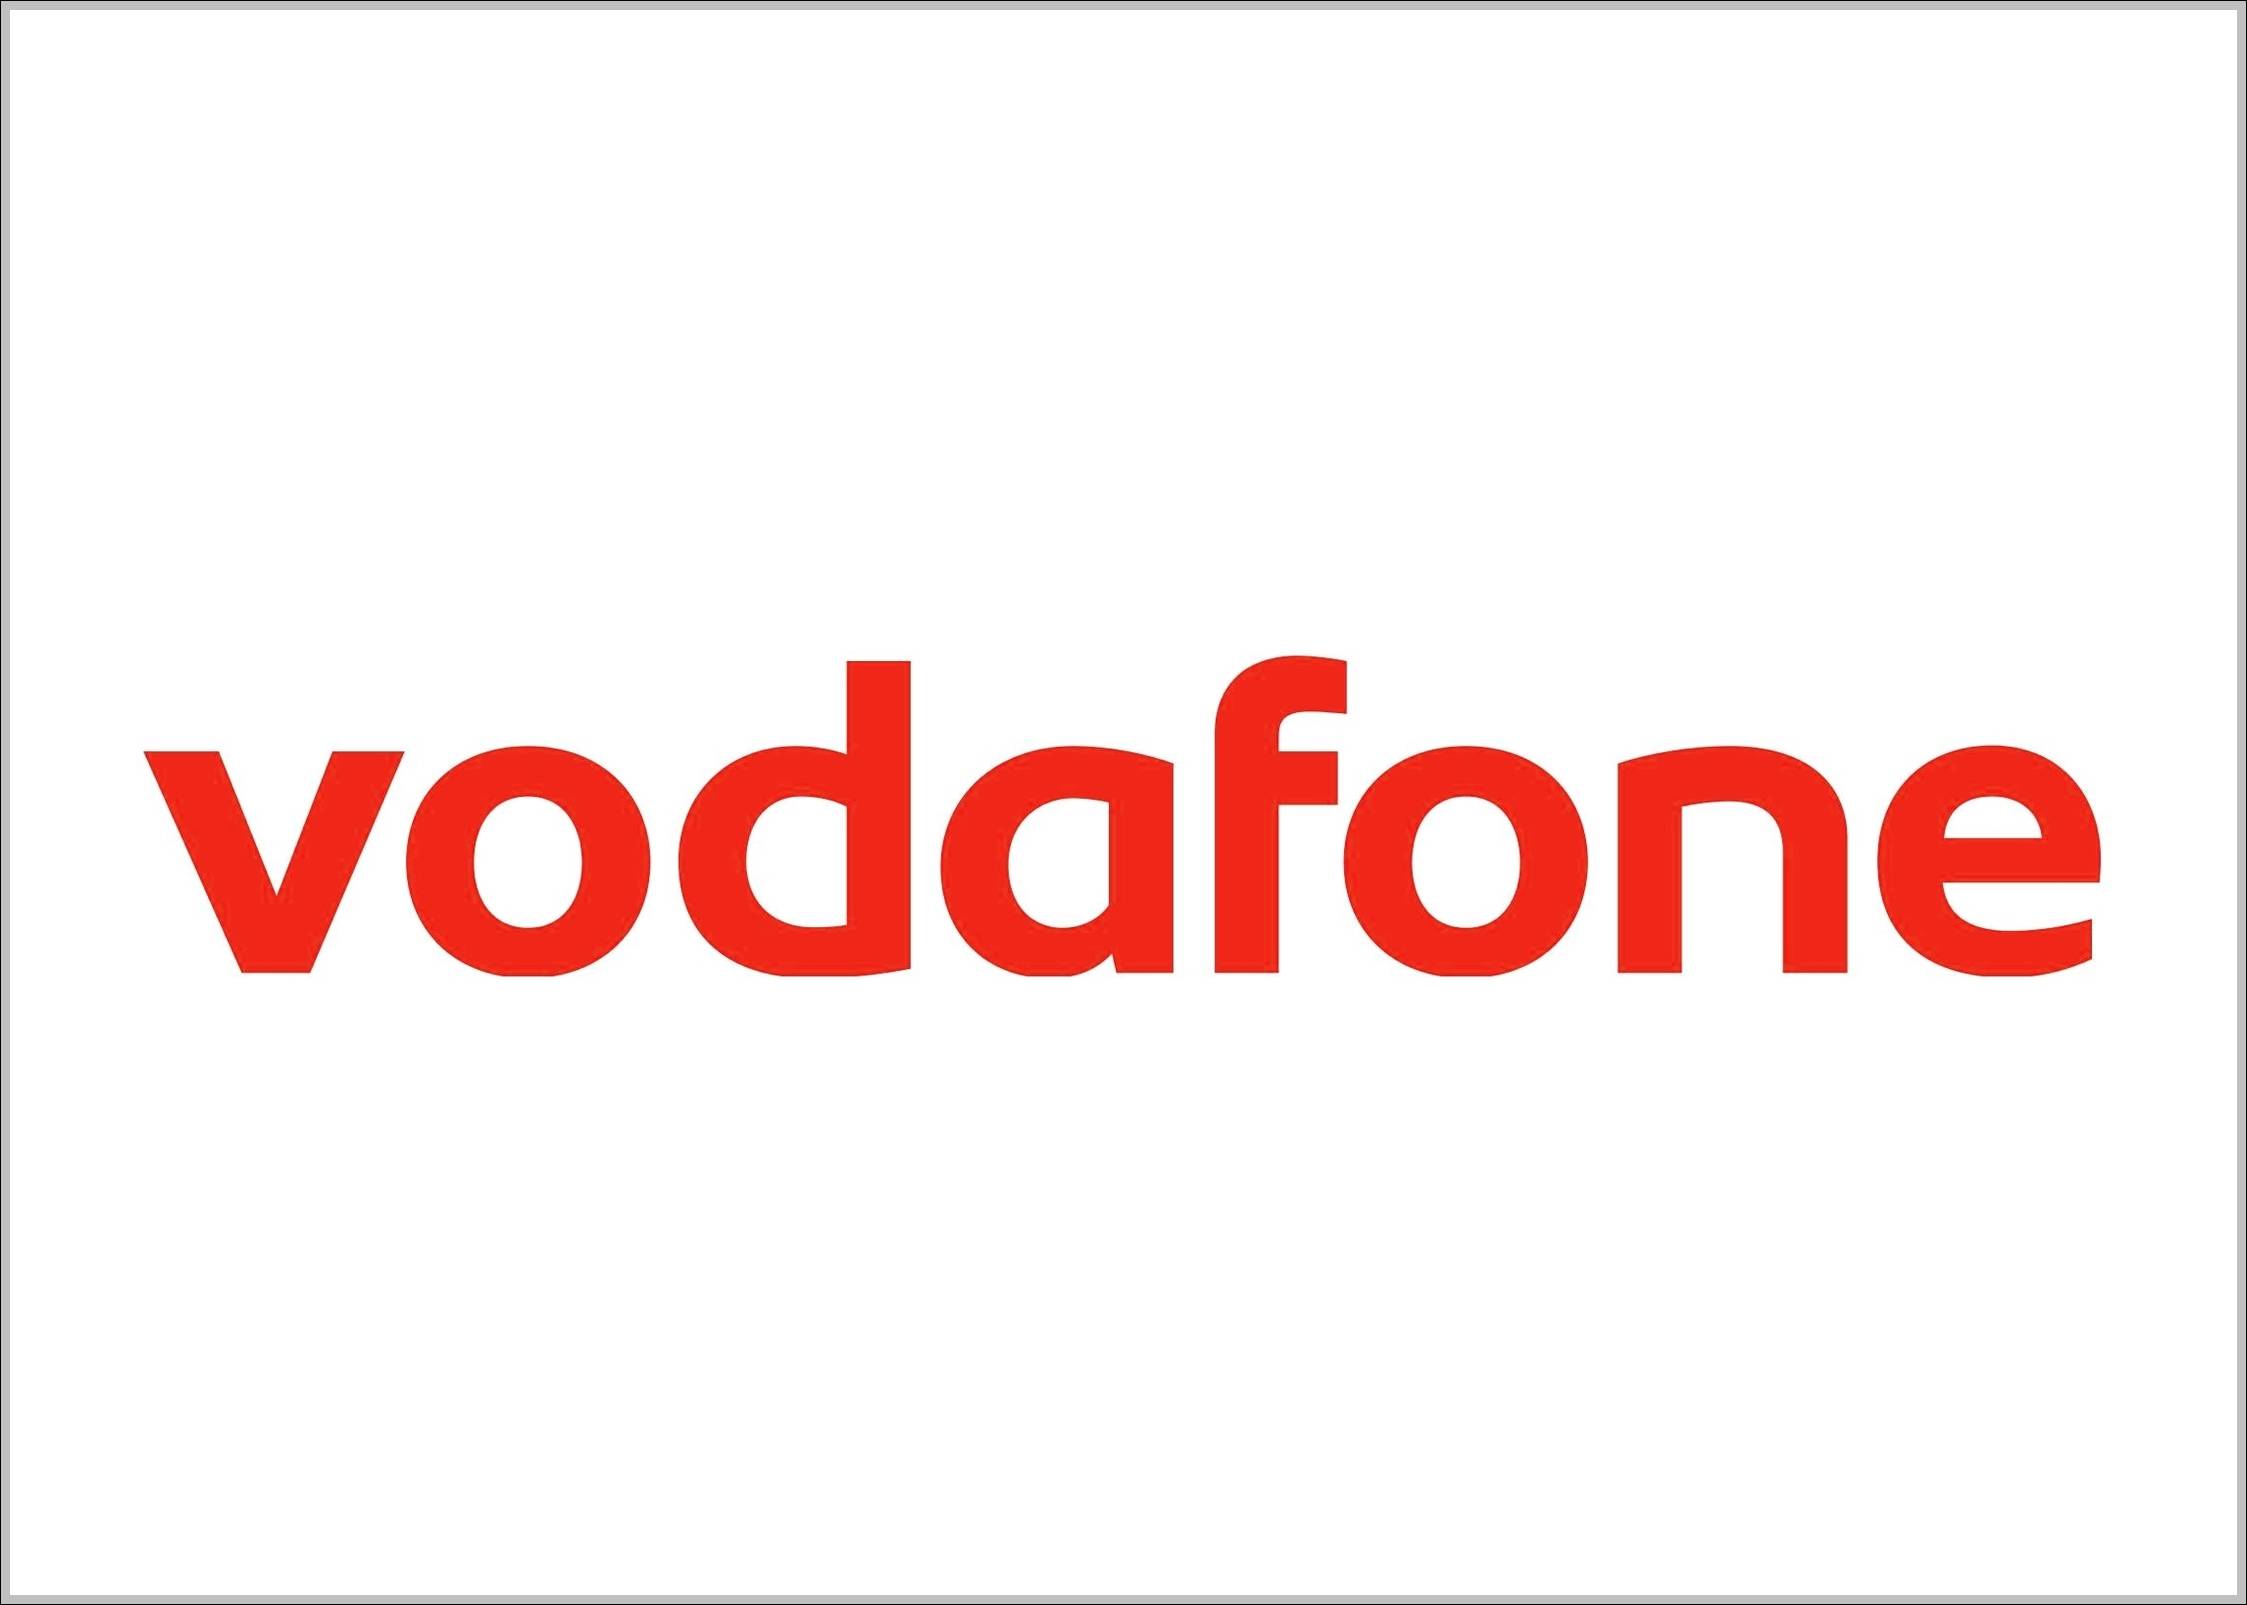 Vodafone sign